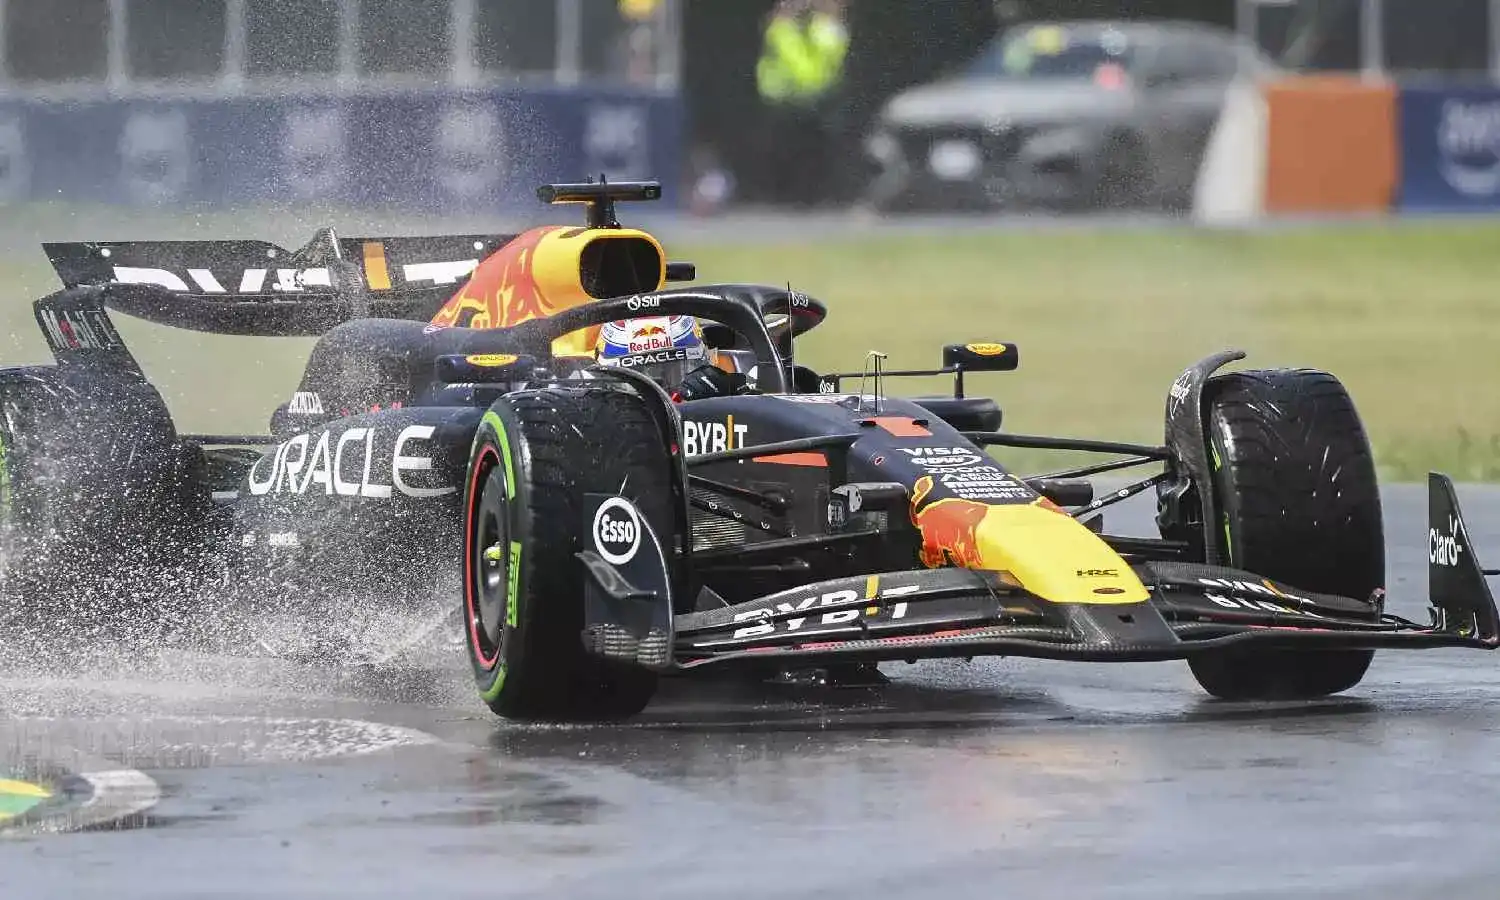 F1 leader Max Verstappen smoky battery problem Canadian Grand Prix practice